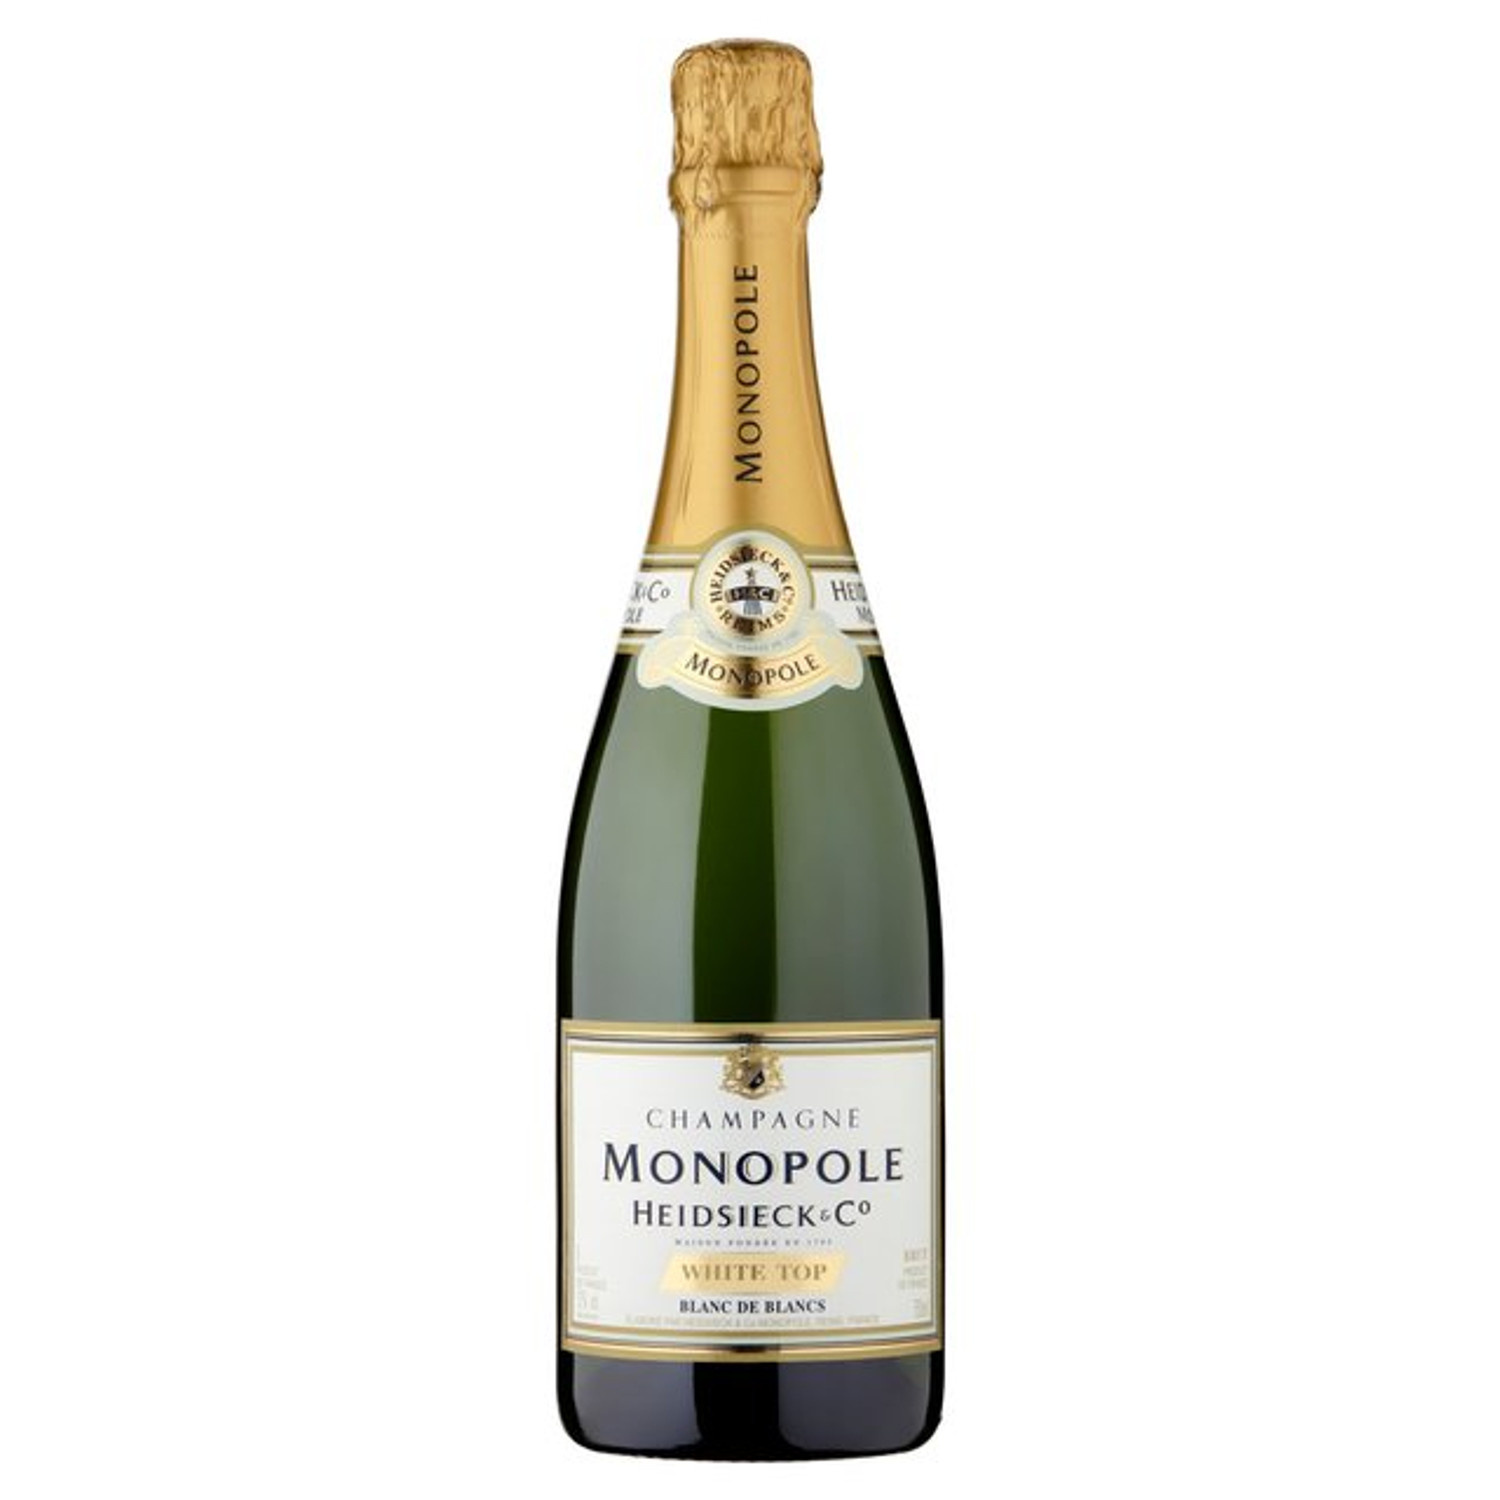 Champagne Monopole, Heidsieck, White Top